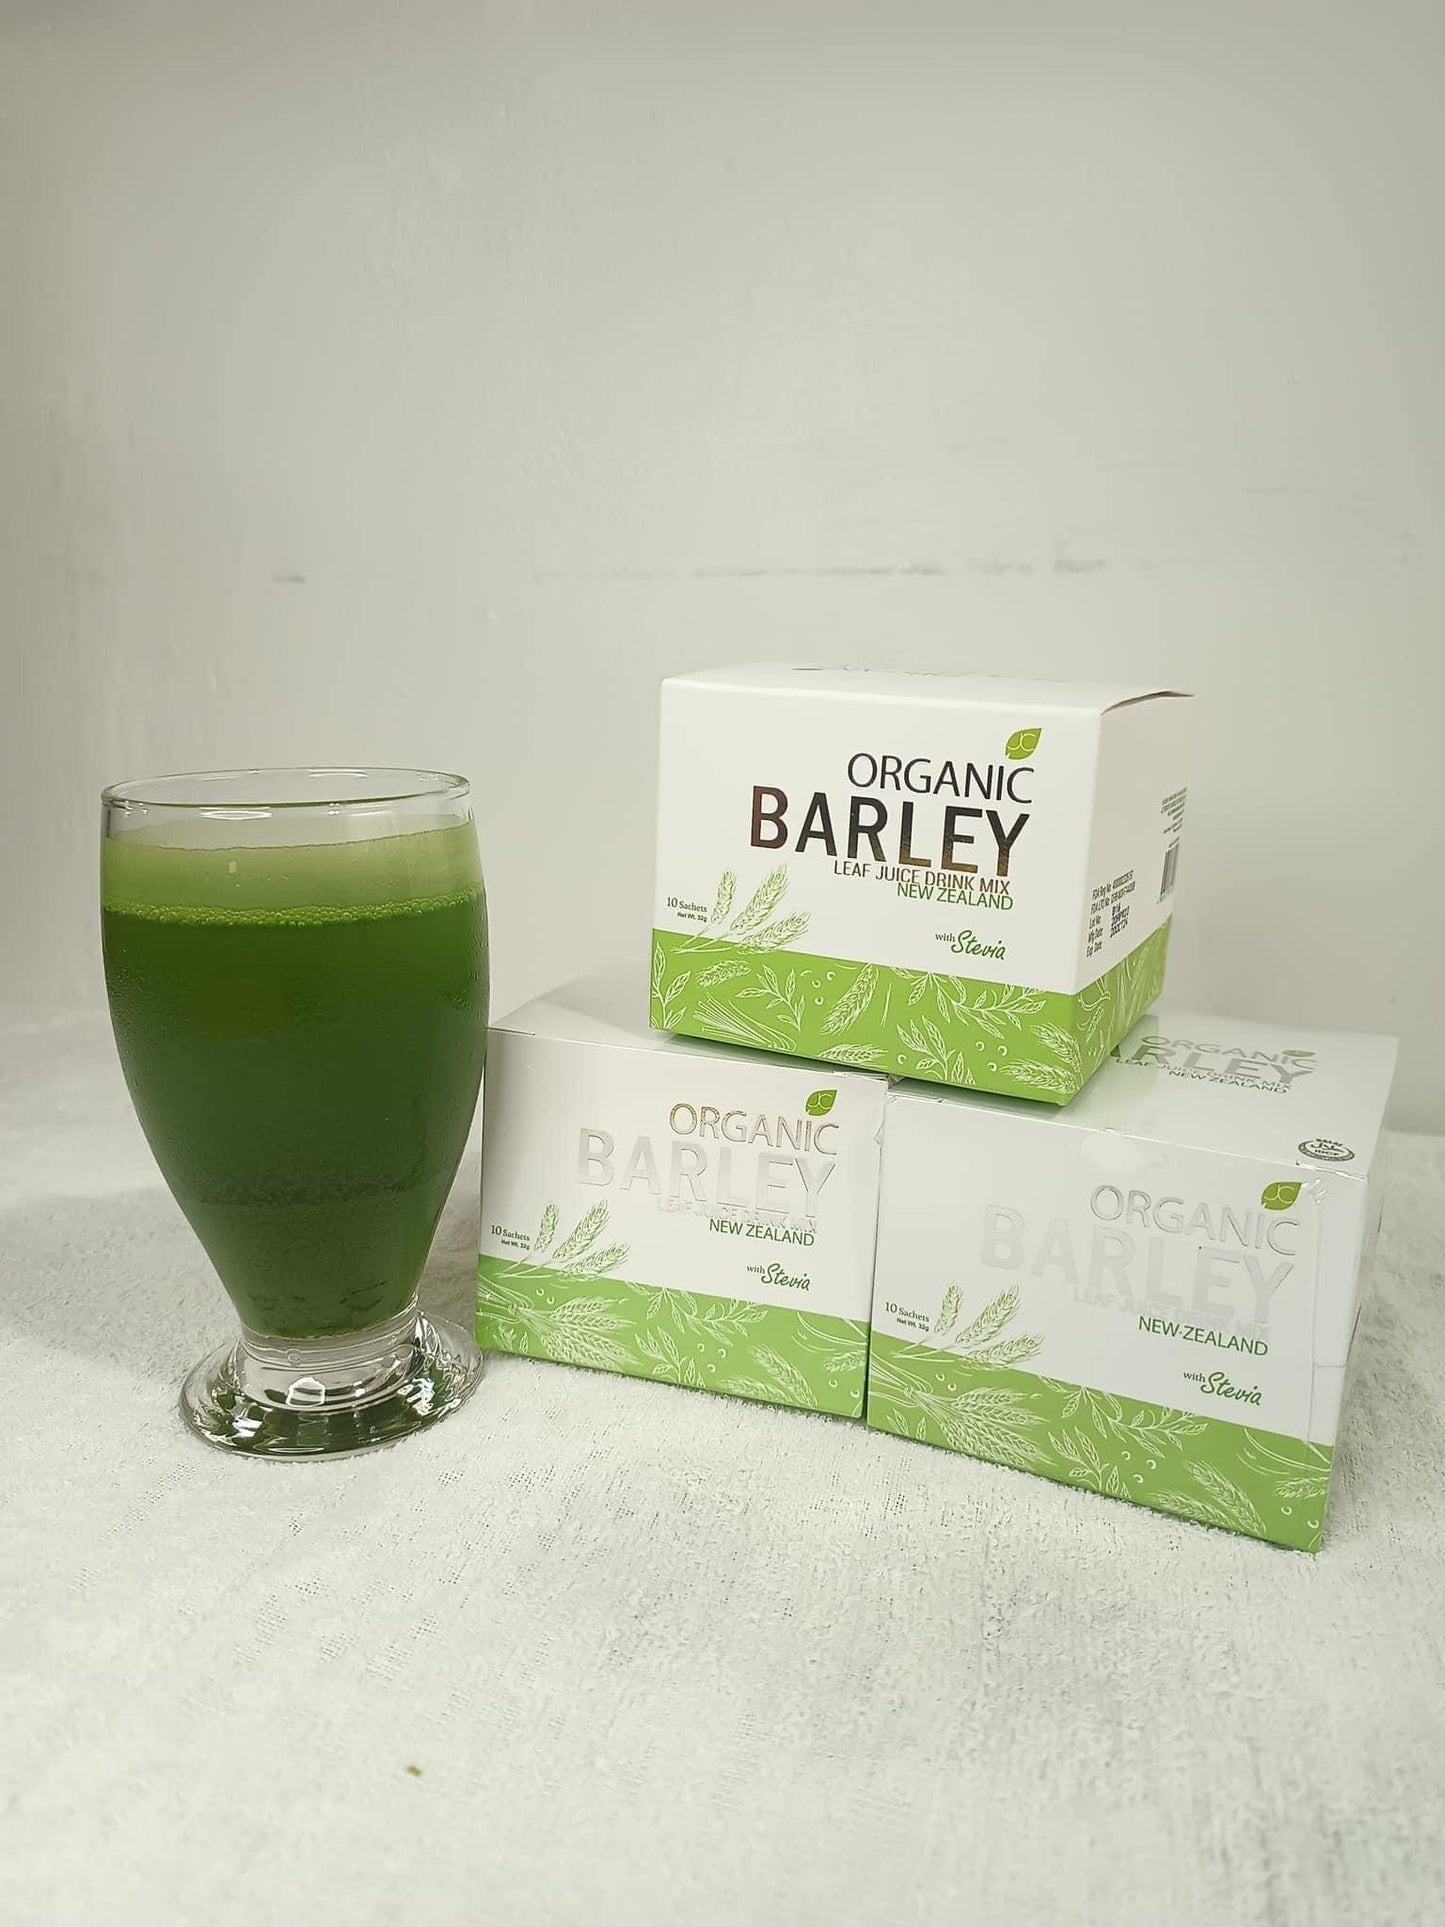 Jc Barley Organic Juice New Zealand (10 Sachet in a box)